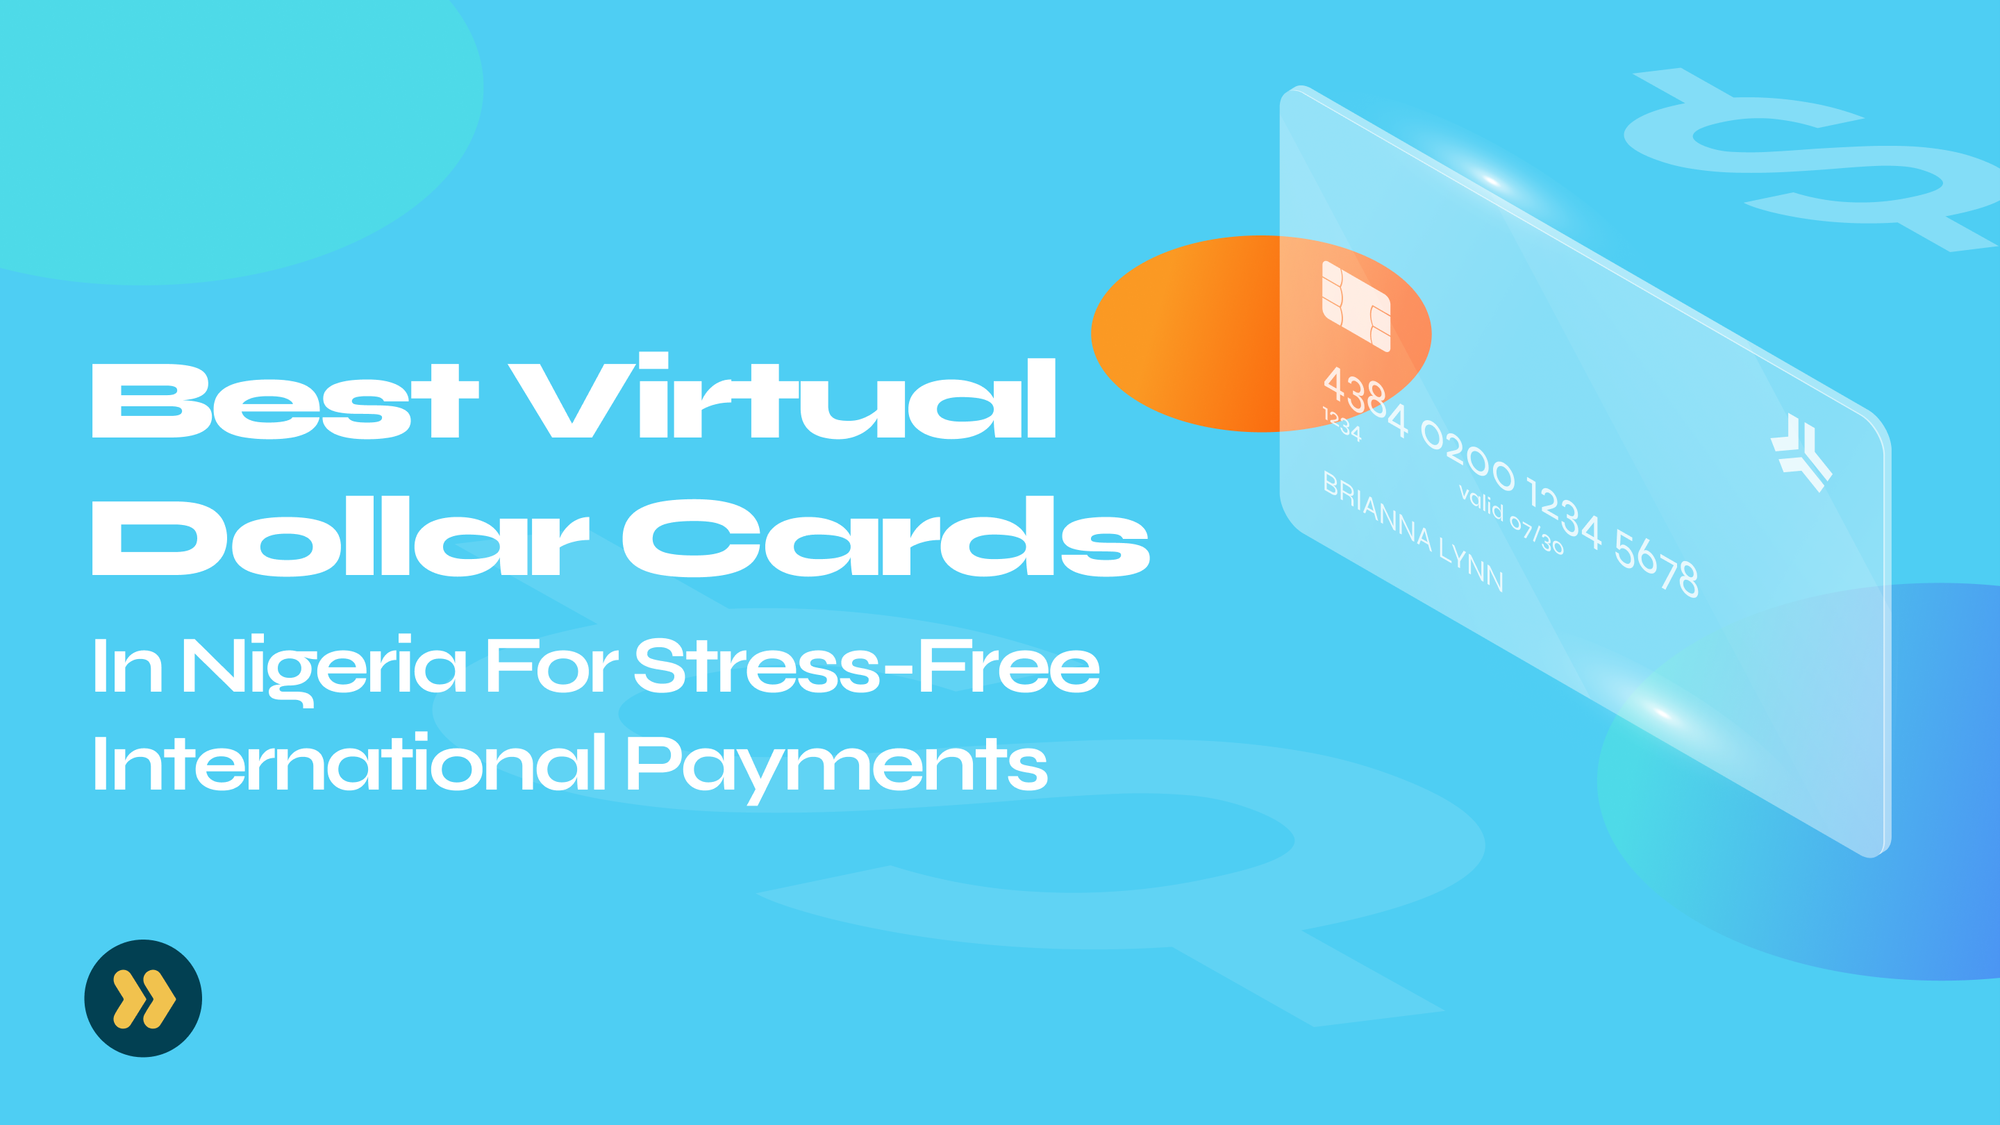 10 Best Virtual Dollar Cards in Nigeria